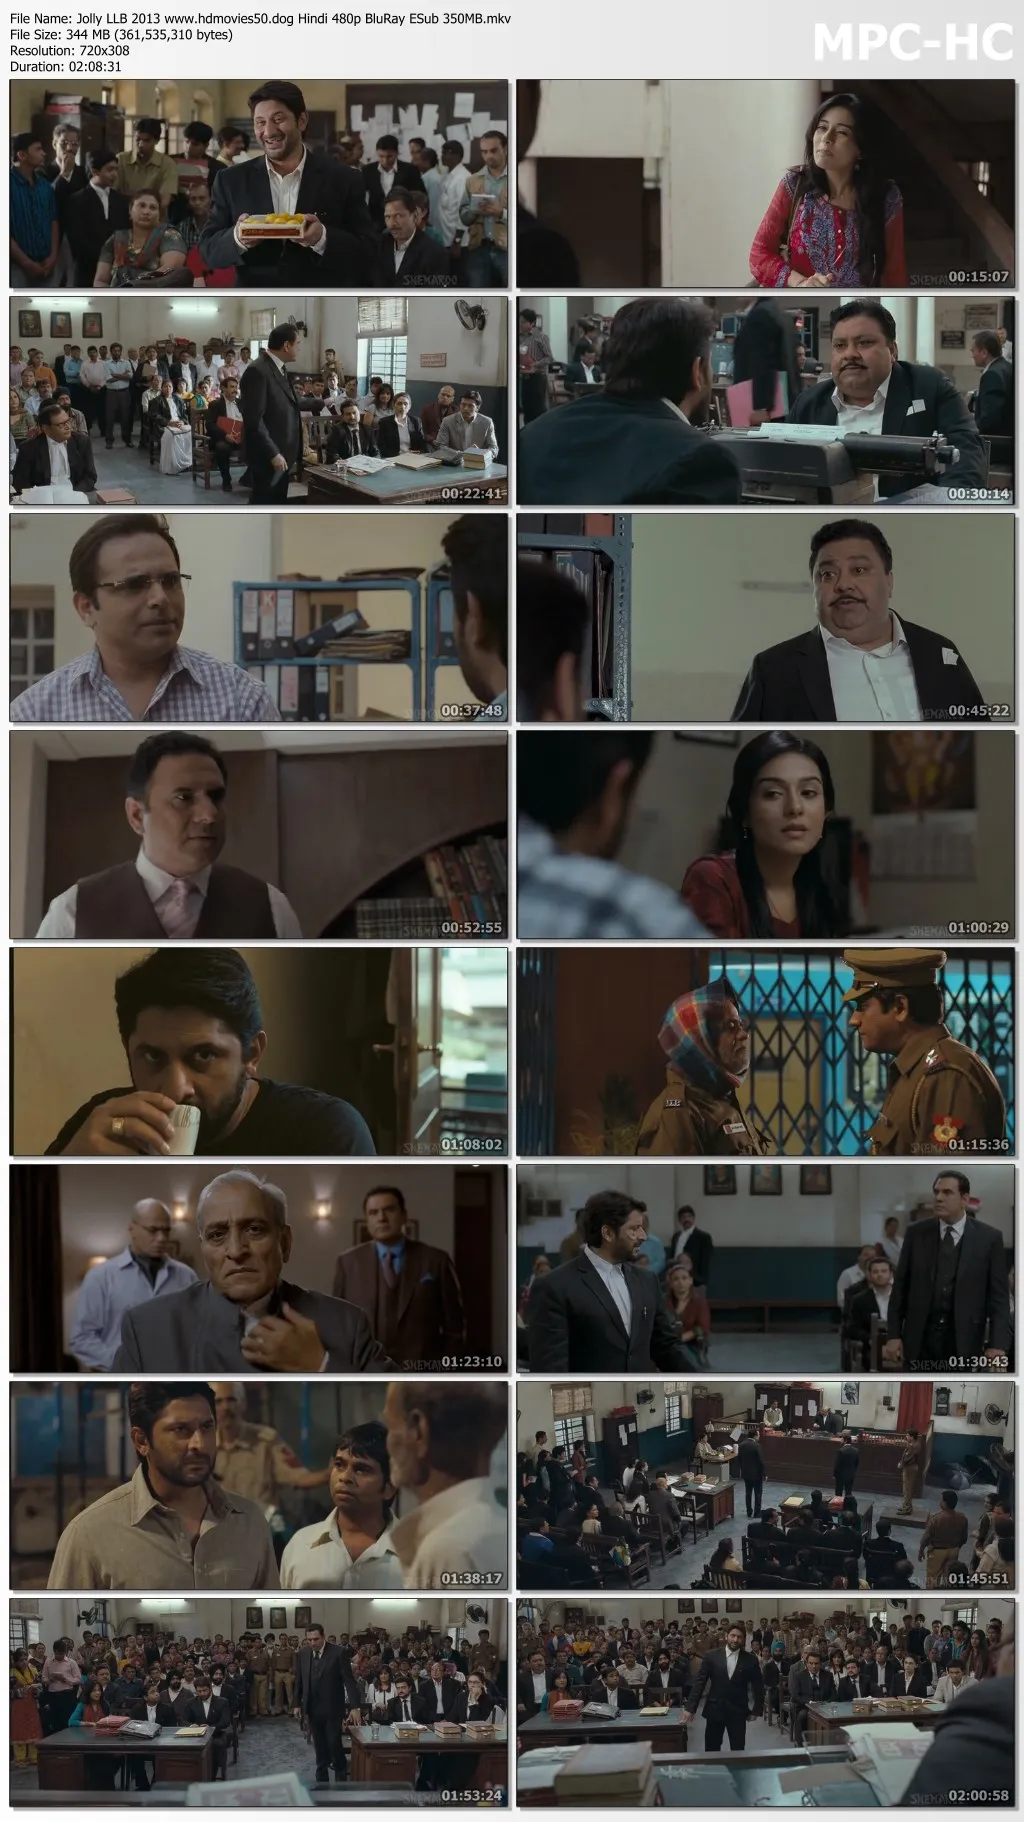 Jolly LLB 2013 Hindi 720p BluRay ESub 1.4GB Download